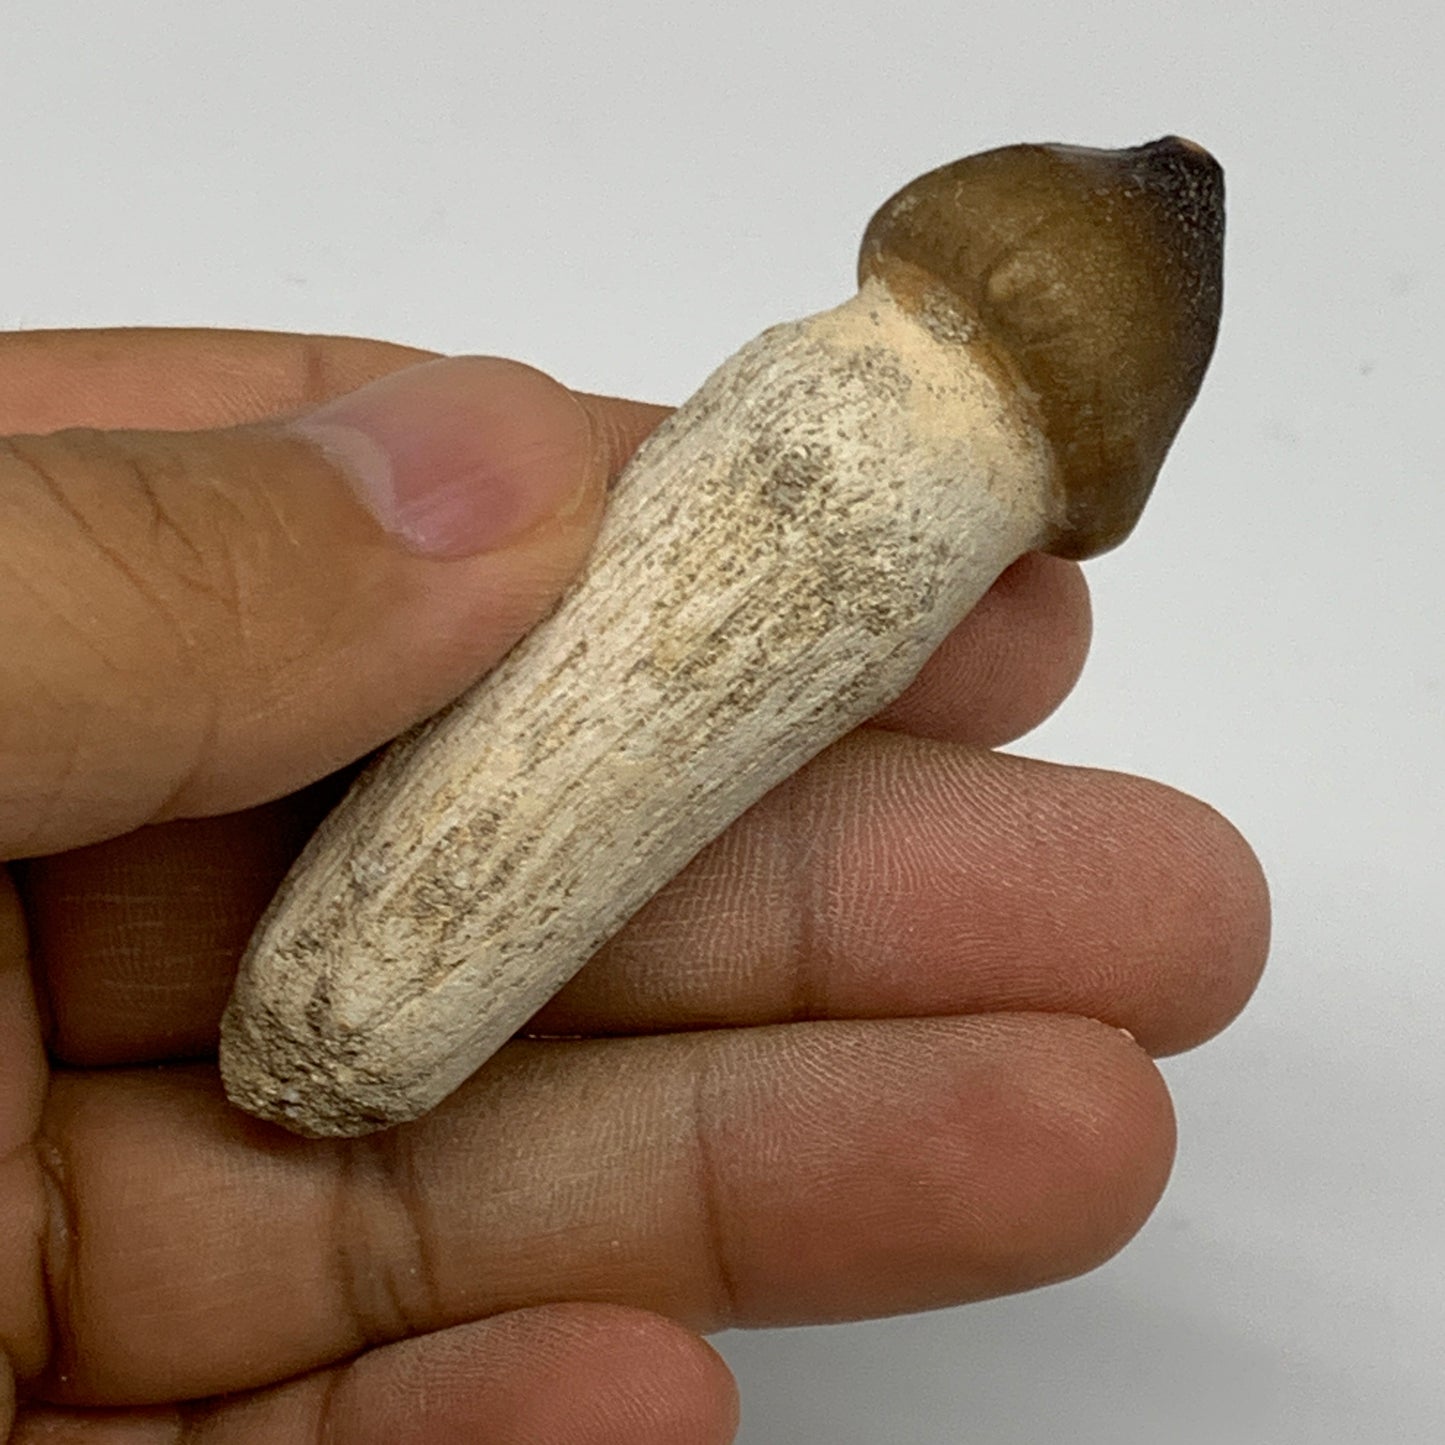 26.4g, 2.8"X0.7"x0.8" Fossil Globidens phosphaticus (Mosasaur ) Tooth, Cretaceou